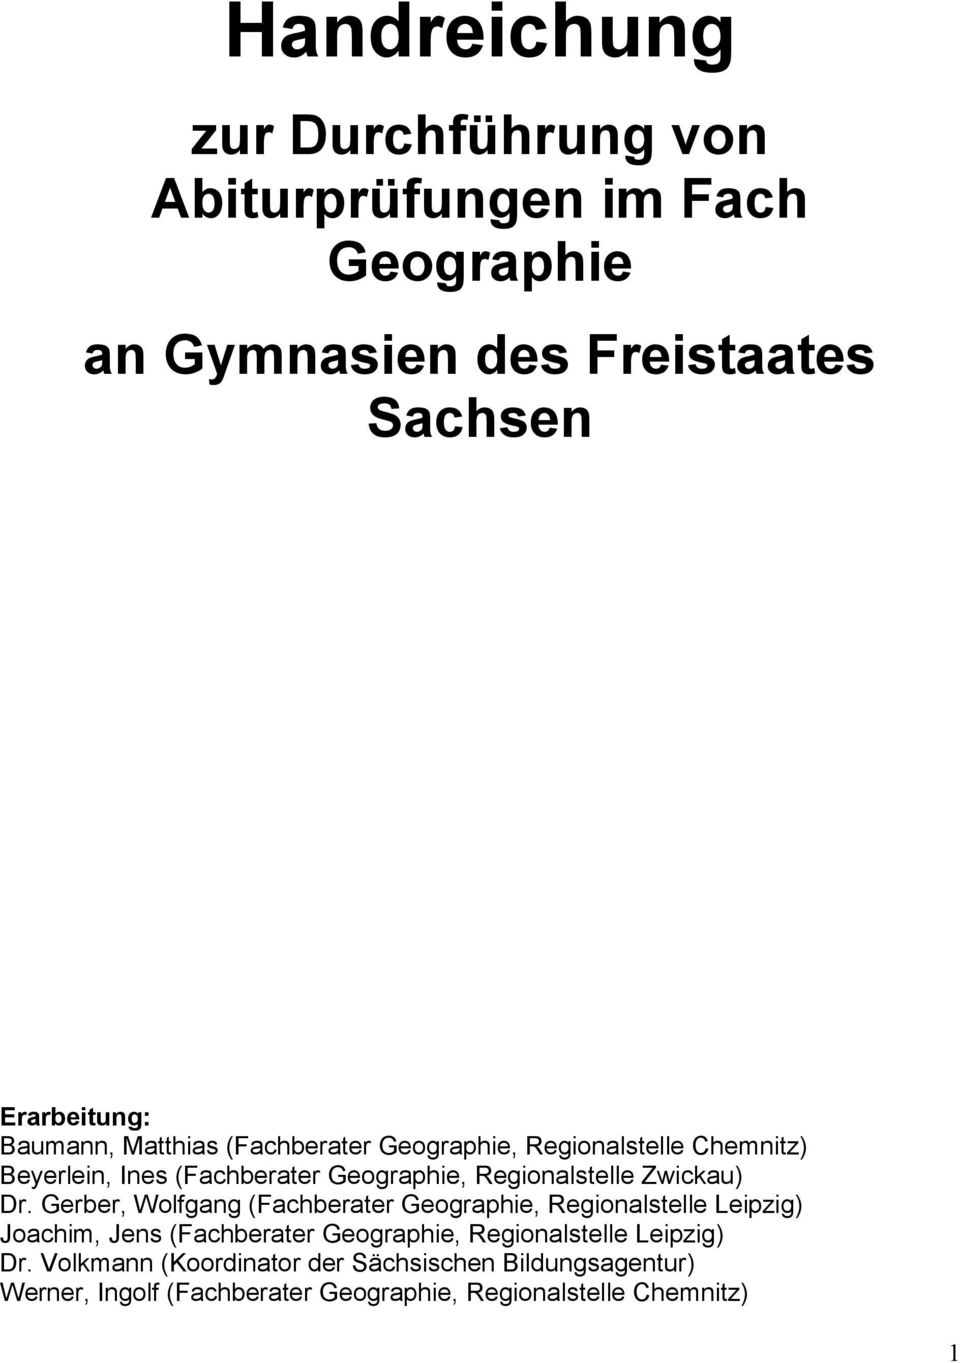 Gerber, Wolfgang (Fachberater Geographie, Regionalstelle Leipzig) Joachim, Jens (Fachberater Geographie, Regionalstelle